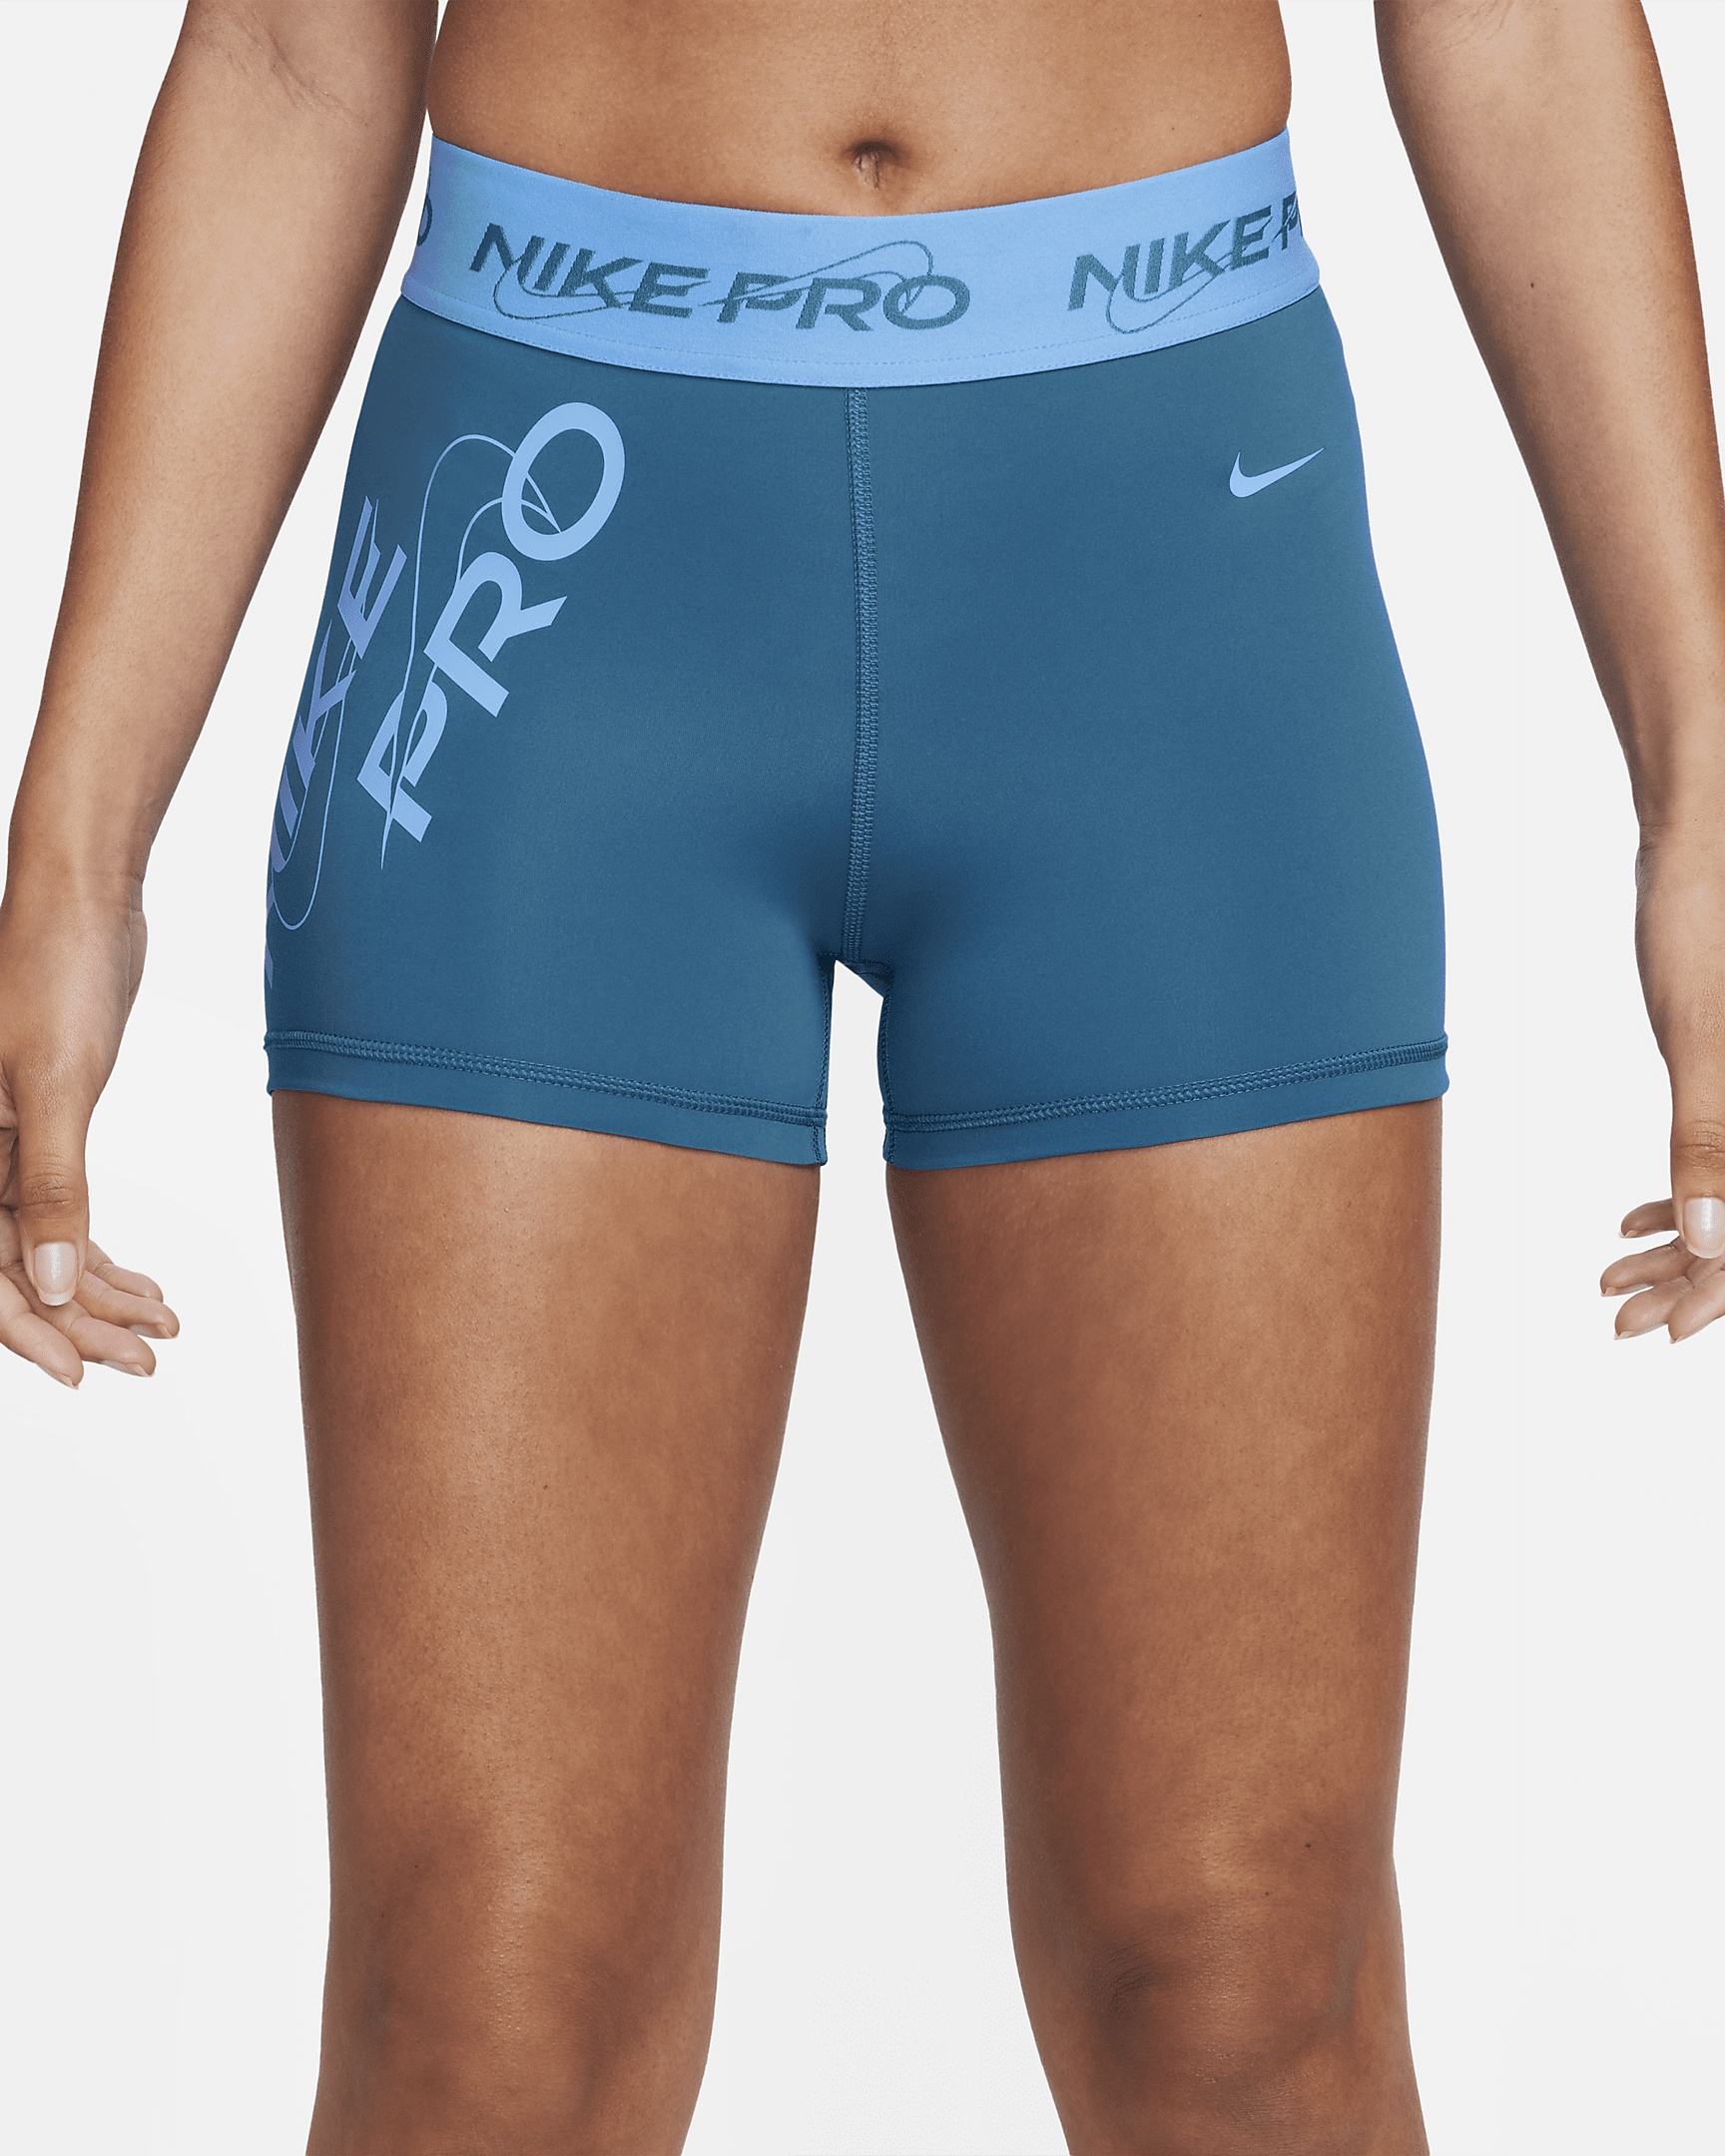 Women's Nike Pro Mid-Rise 3" Graphic Shorts - 2